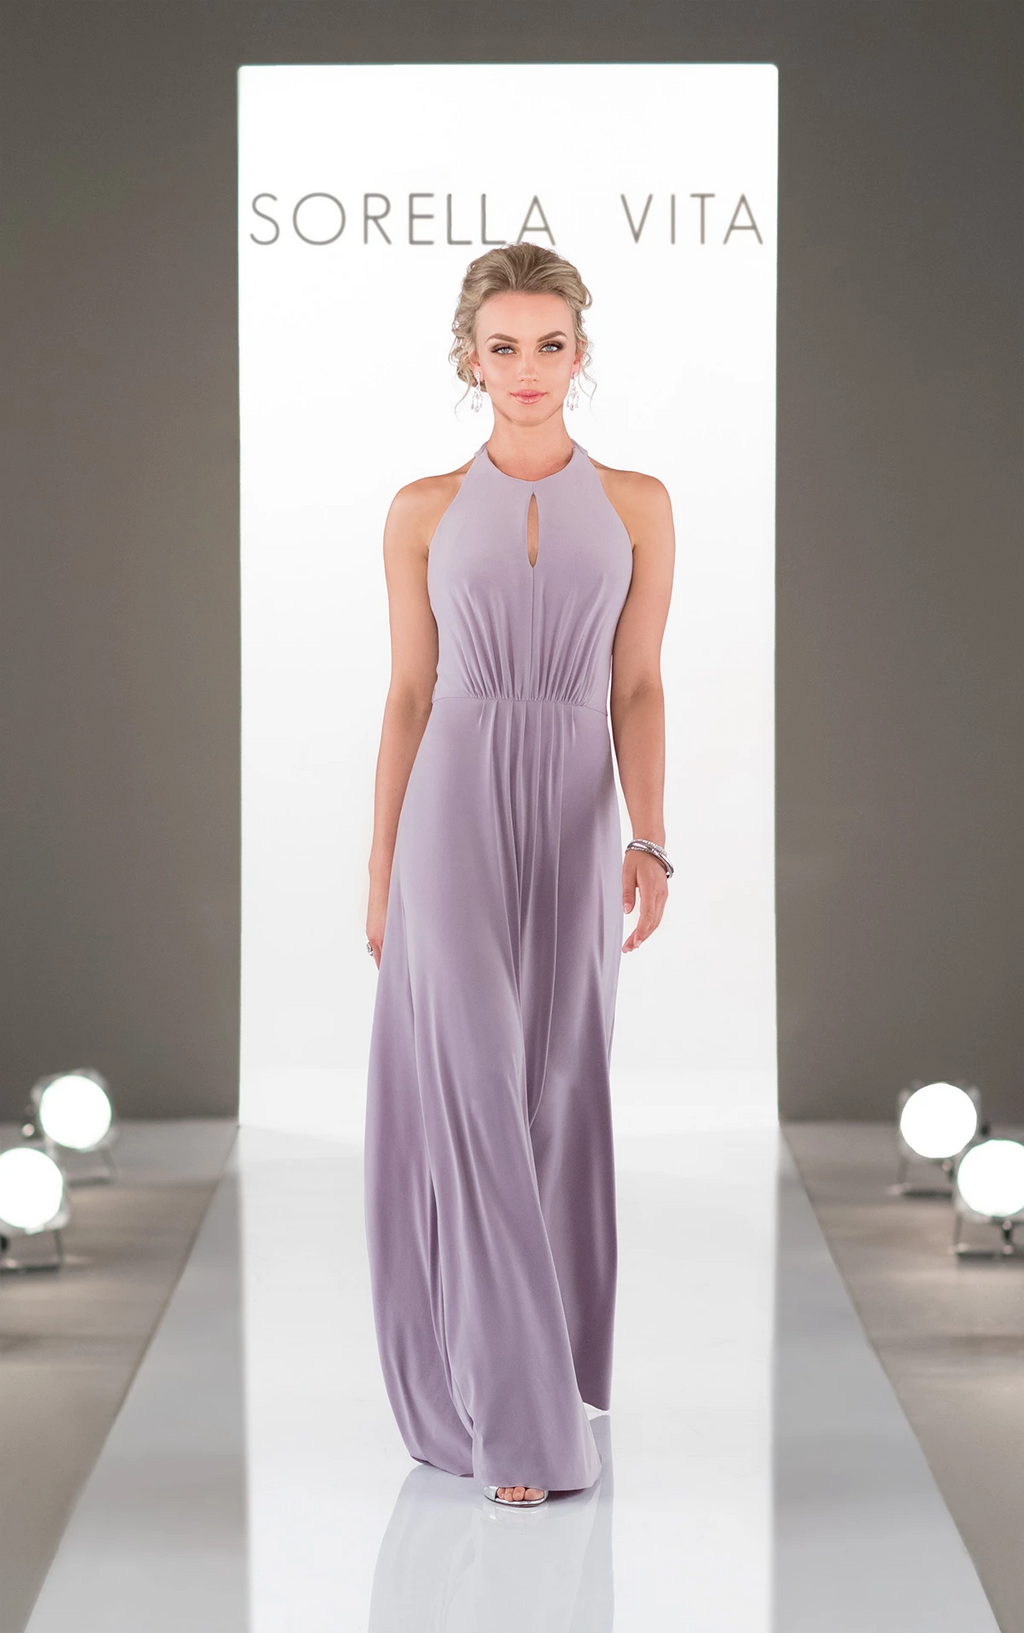 Sorella Vita Dress Style 8956 (Thistle-Size 12) Prom, Ball., Black-tie, Bridesmaid, Pageant (Copy)